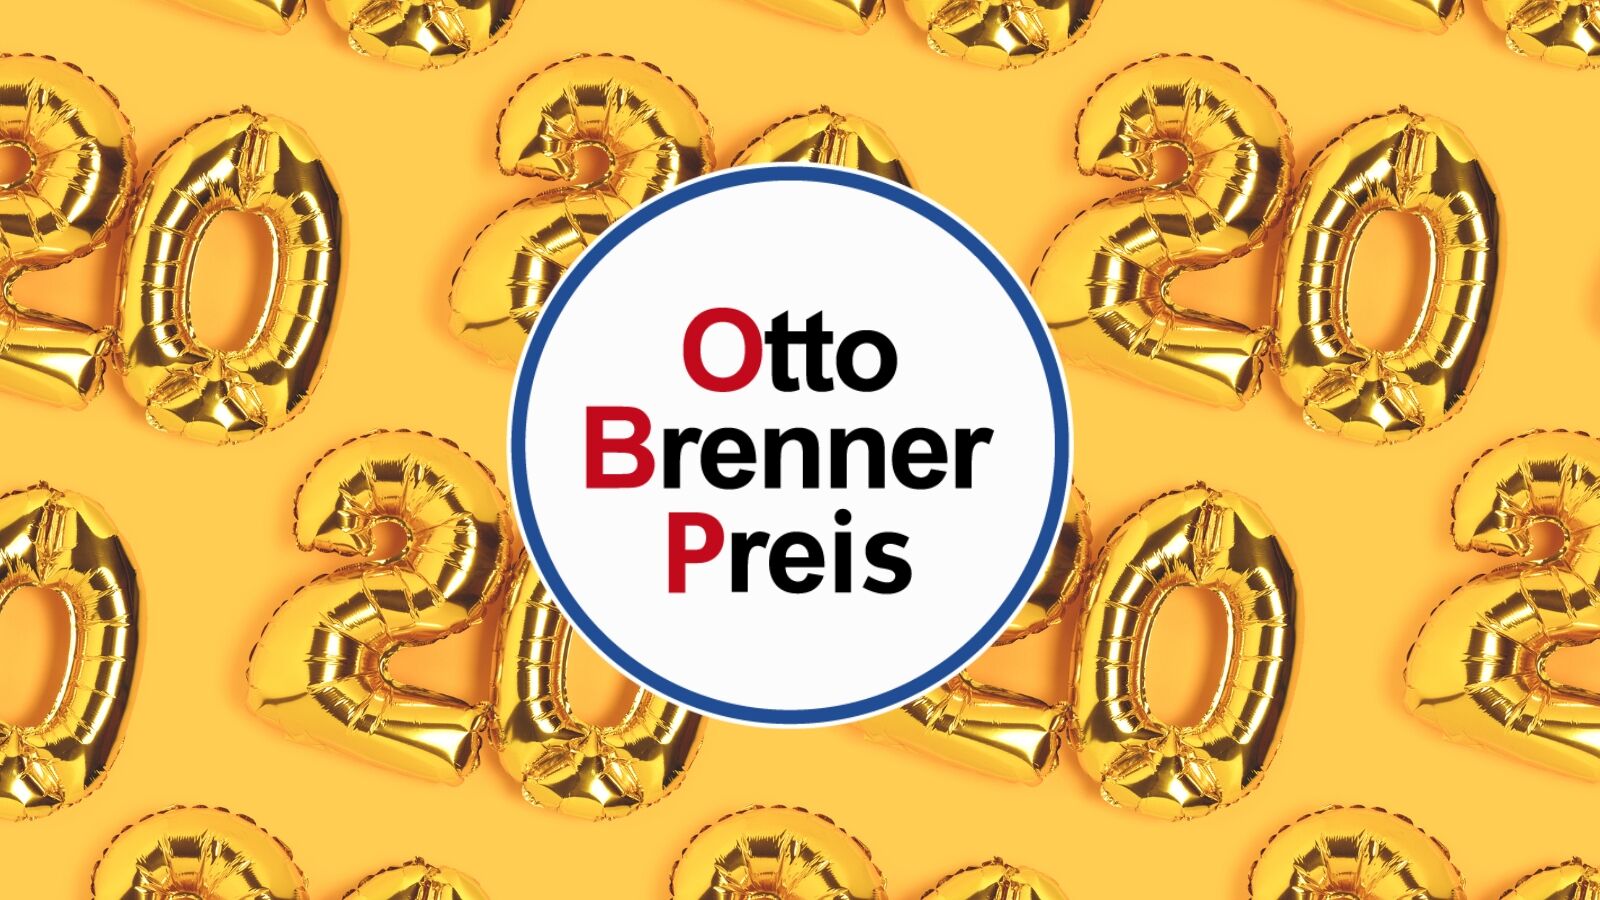 (c) Otto-brenner-preis.de